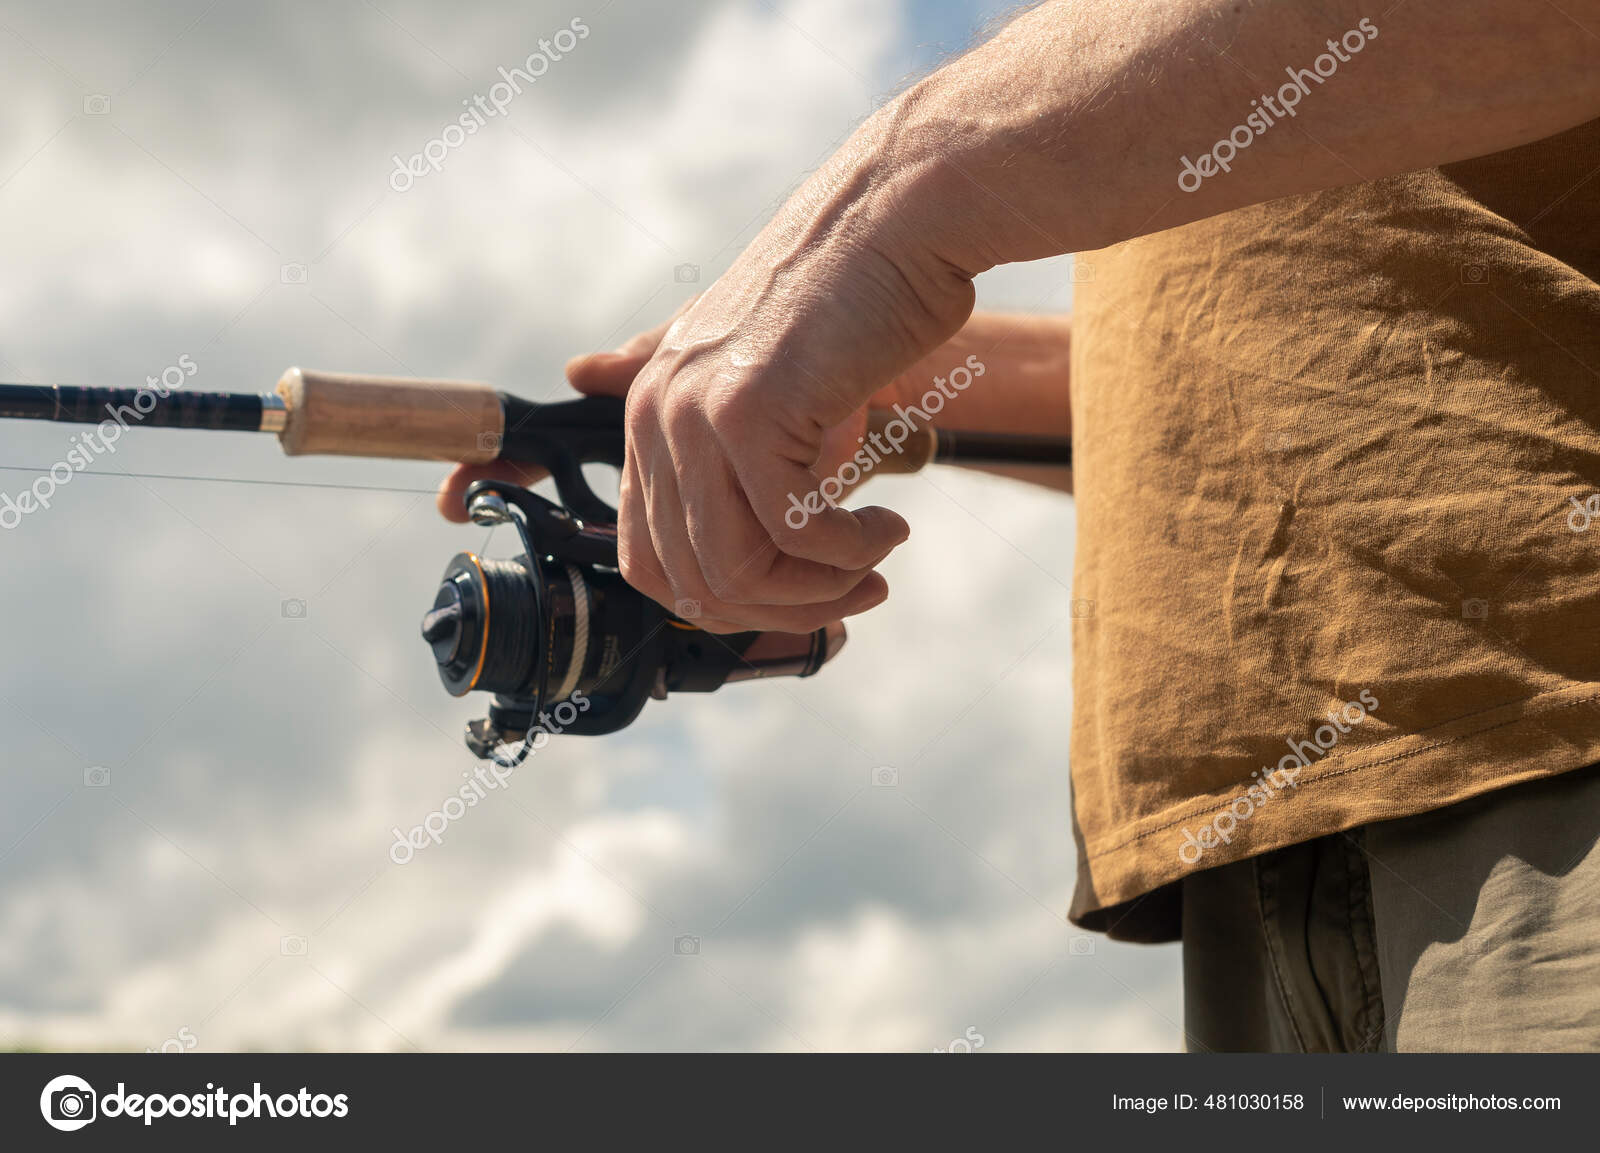 https://st2.depositphotos.com/39463116/48103/i/1600/depositphotos_481030158-stock-photo-fisherman-hands-holding-spinning-reel.jpg